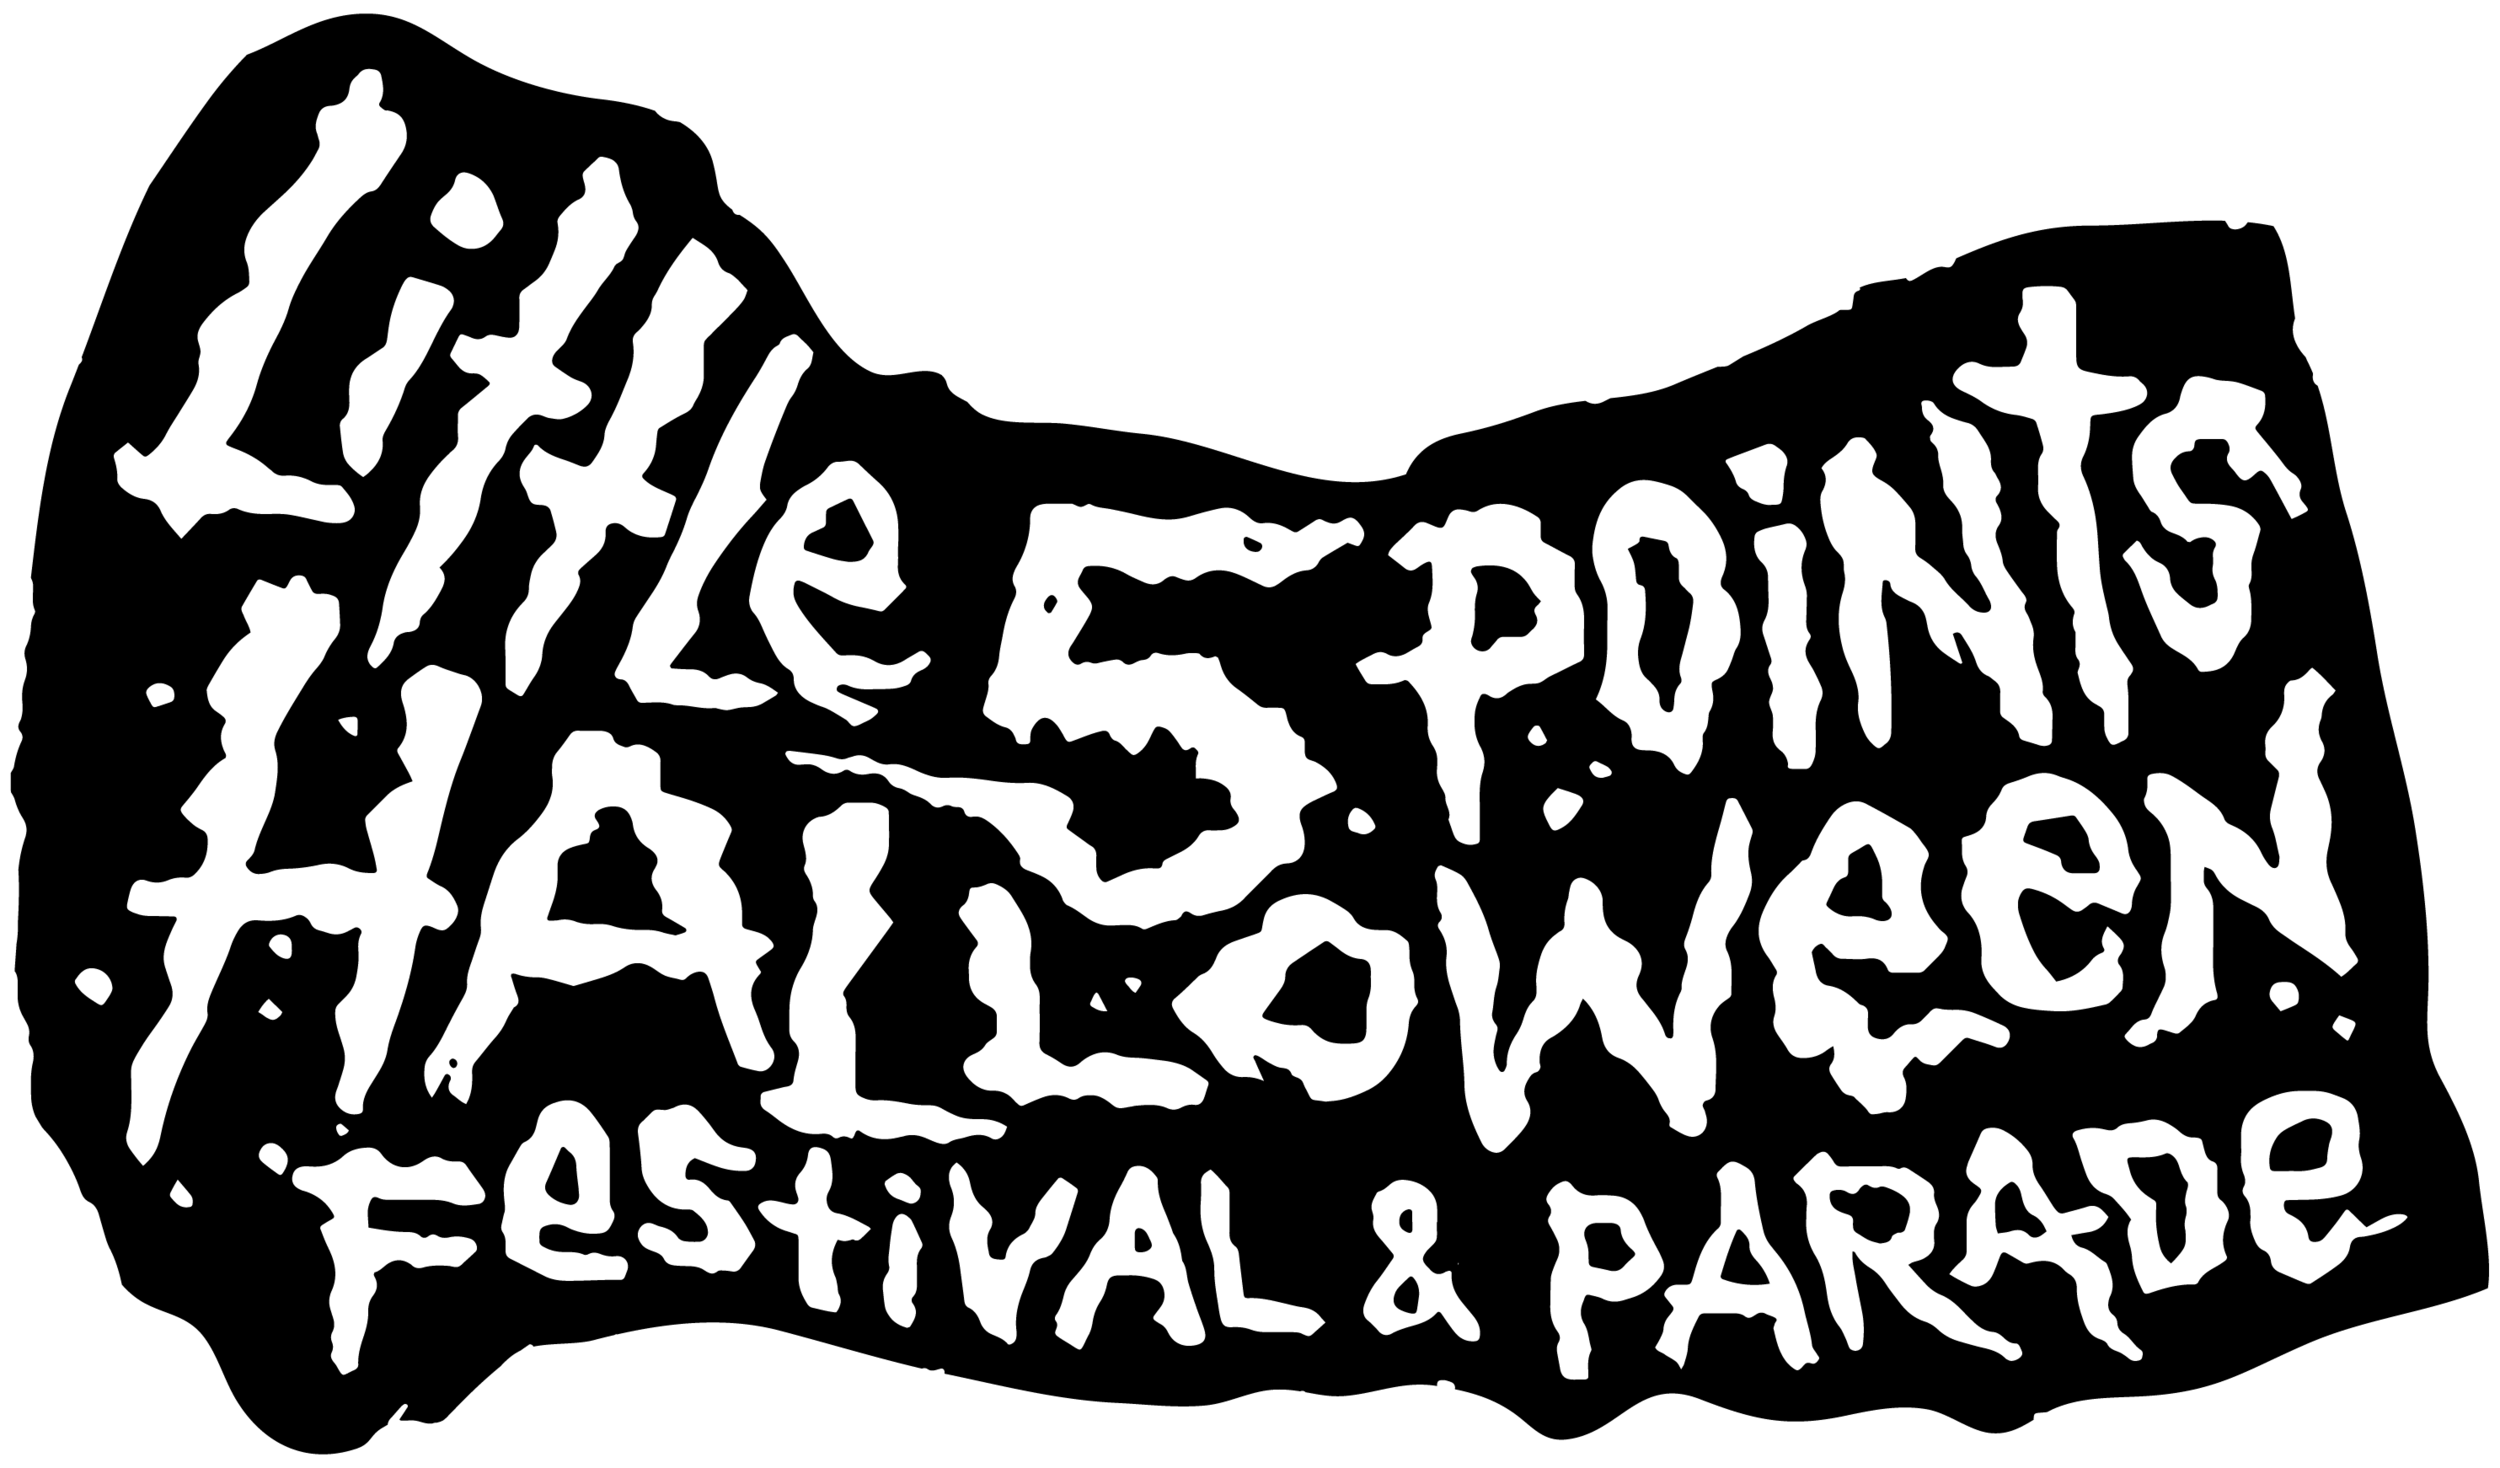 Little 5 Points Halloween Festival & Parade